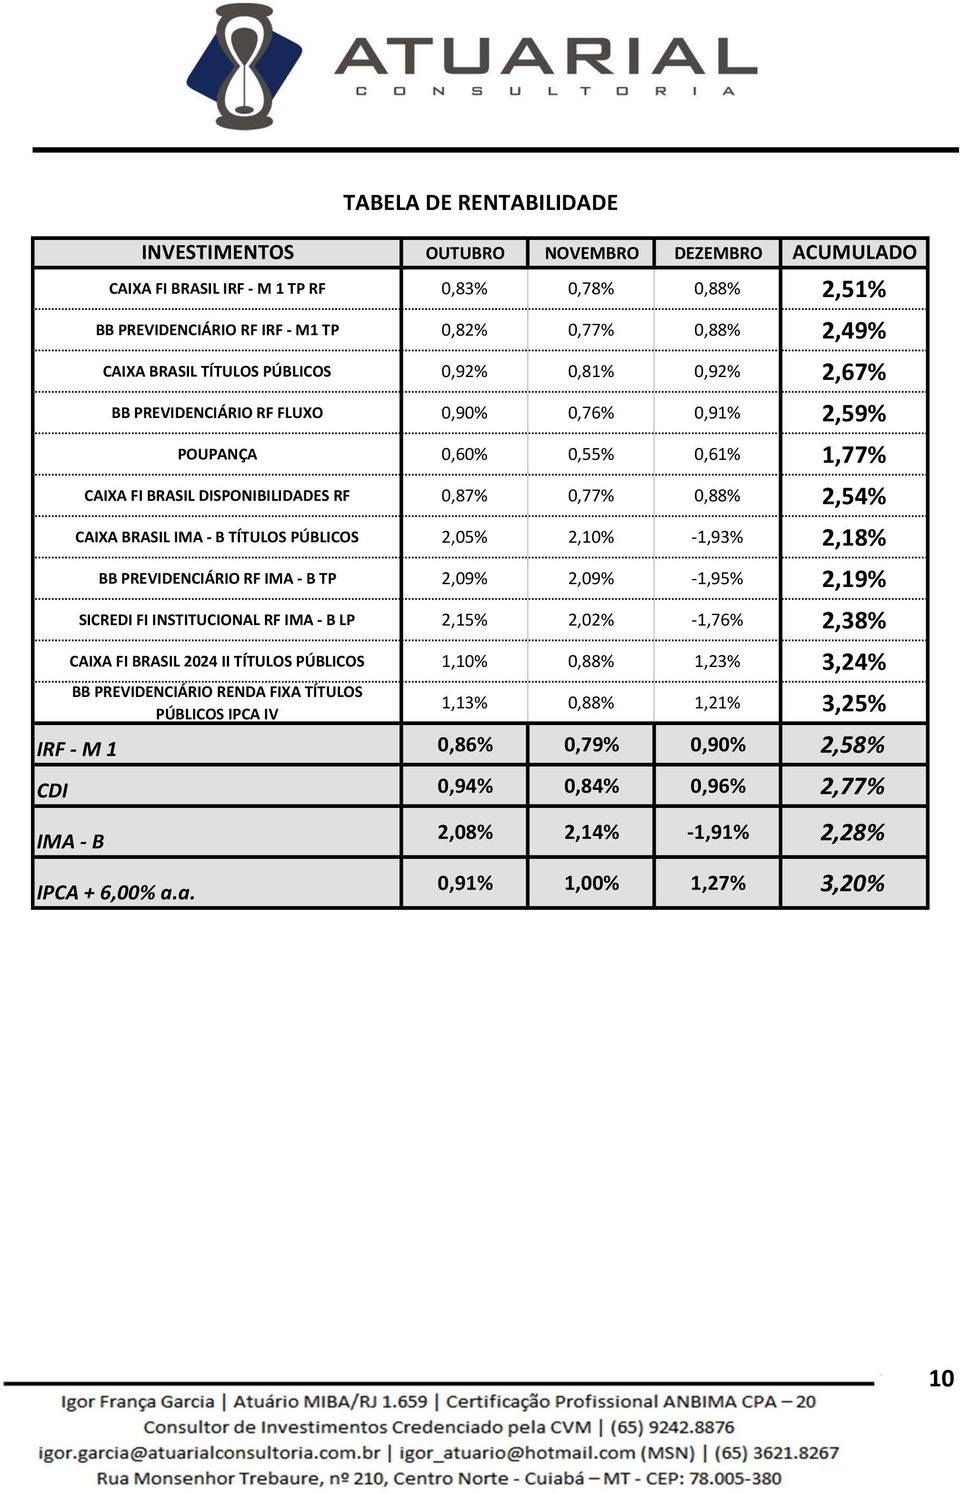 2,05% 2,10% -1,93% 2,18% BB PREVIDENCIÁRIO RF IMA - B TP 2,09% 2,09% -1,95% 2,19% SICREDI FI INSTITUCIONAL RF IMA - B LP 2,15% 2,02% -1,76% 2,38% CAIXA FI BRASIL 2024 II TÍTULOS PÚBLICOS 1,10% 0,88%